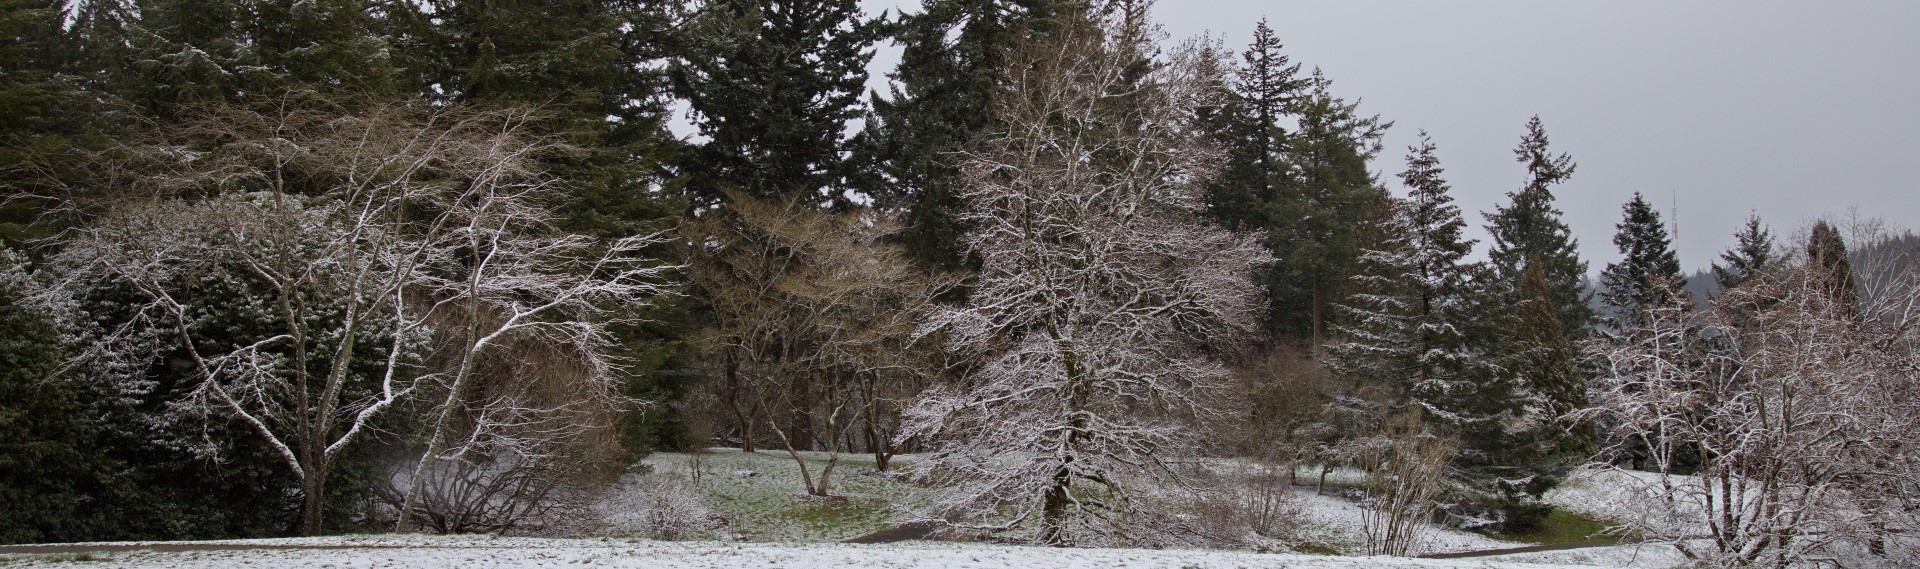 WAITLIST – Winter Tree Energy